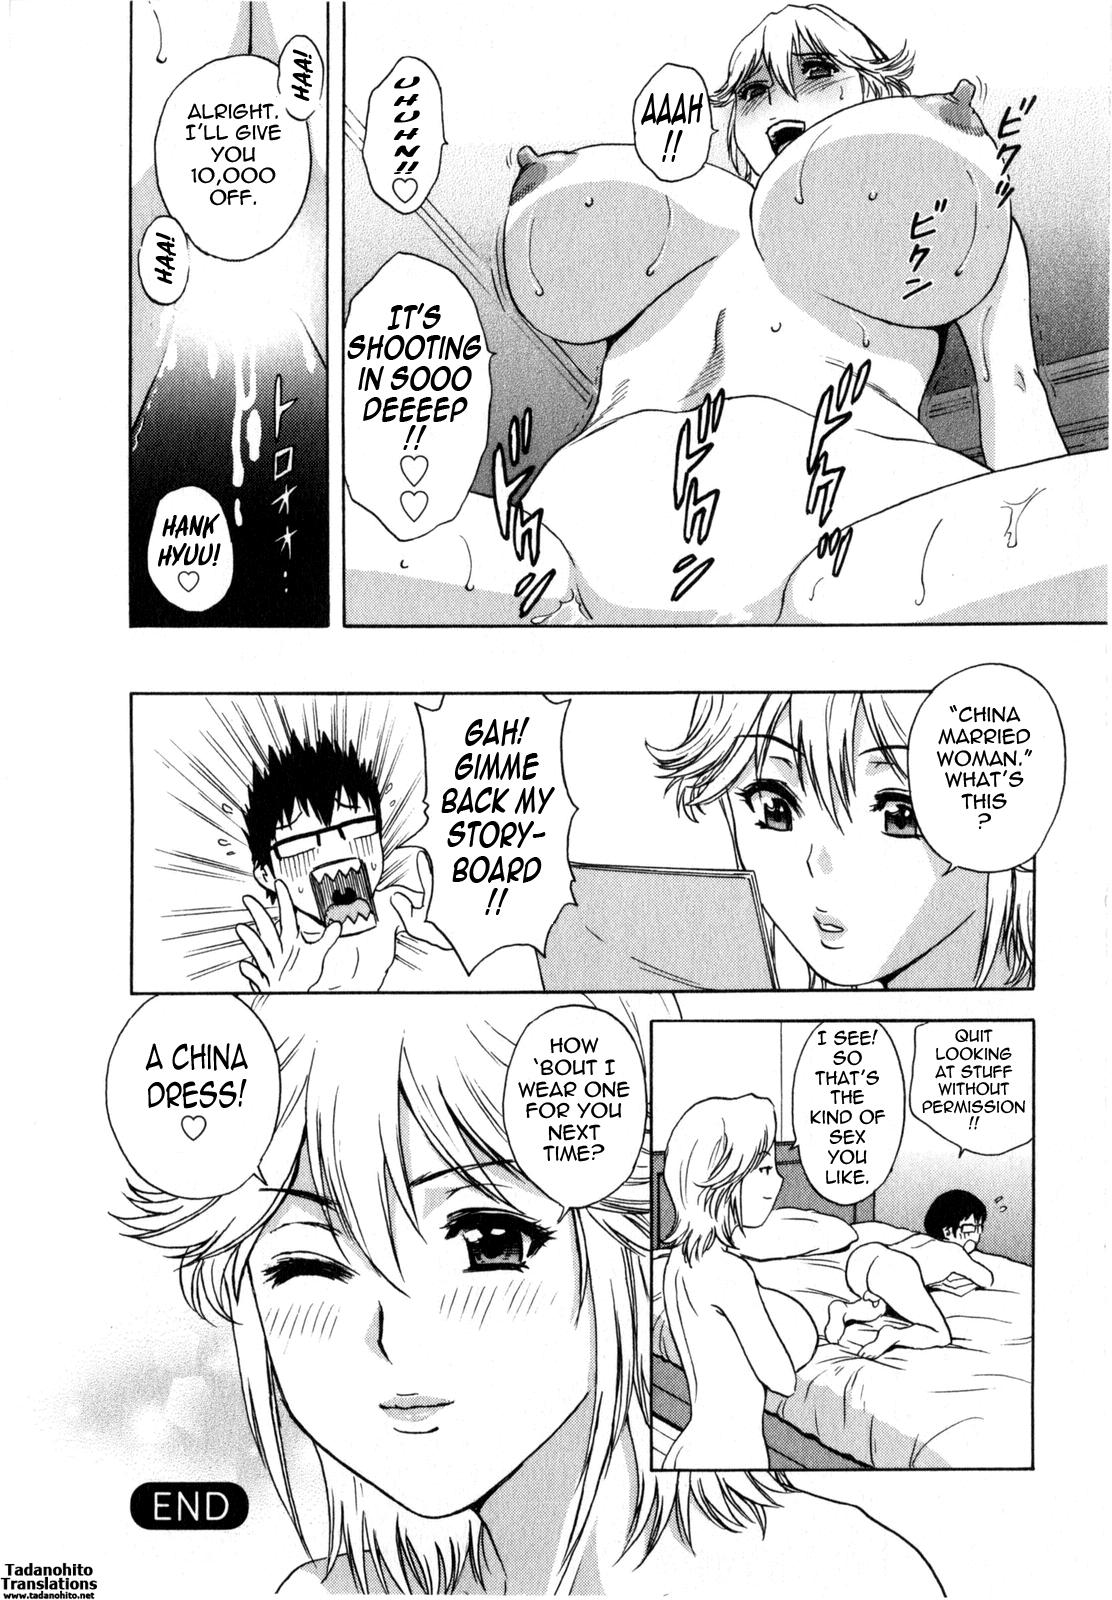 [Hidemaru] Life with Married Women Just Like a Manga 2 - Ch. 1-3 [English] {Tadanohito} 63